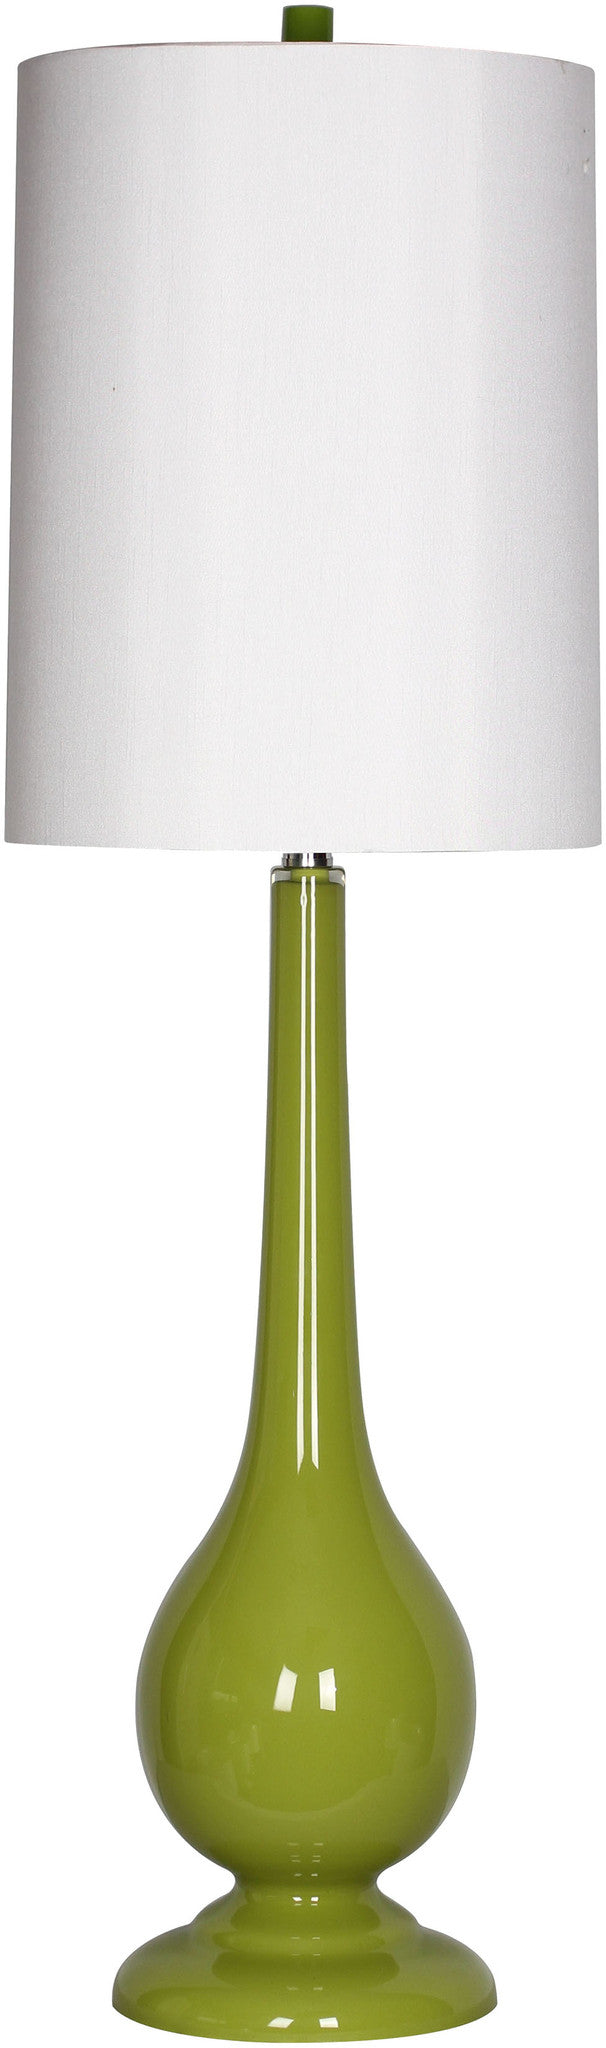 Surya Glass LMP-1054 White Lamp Table Lamp